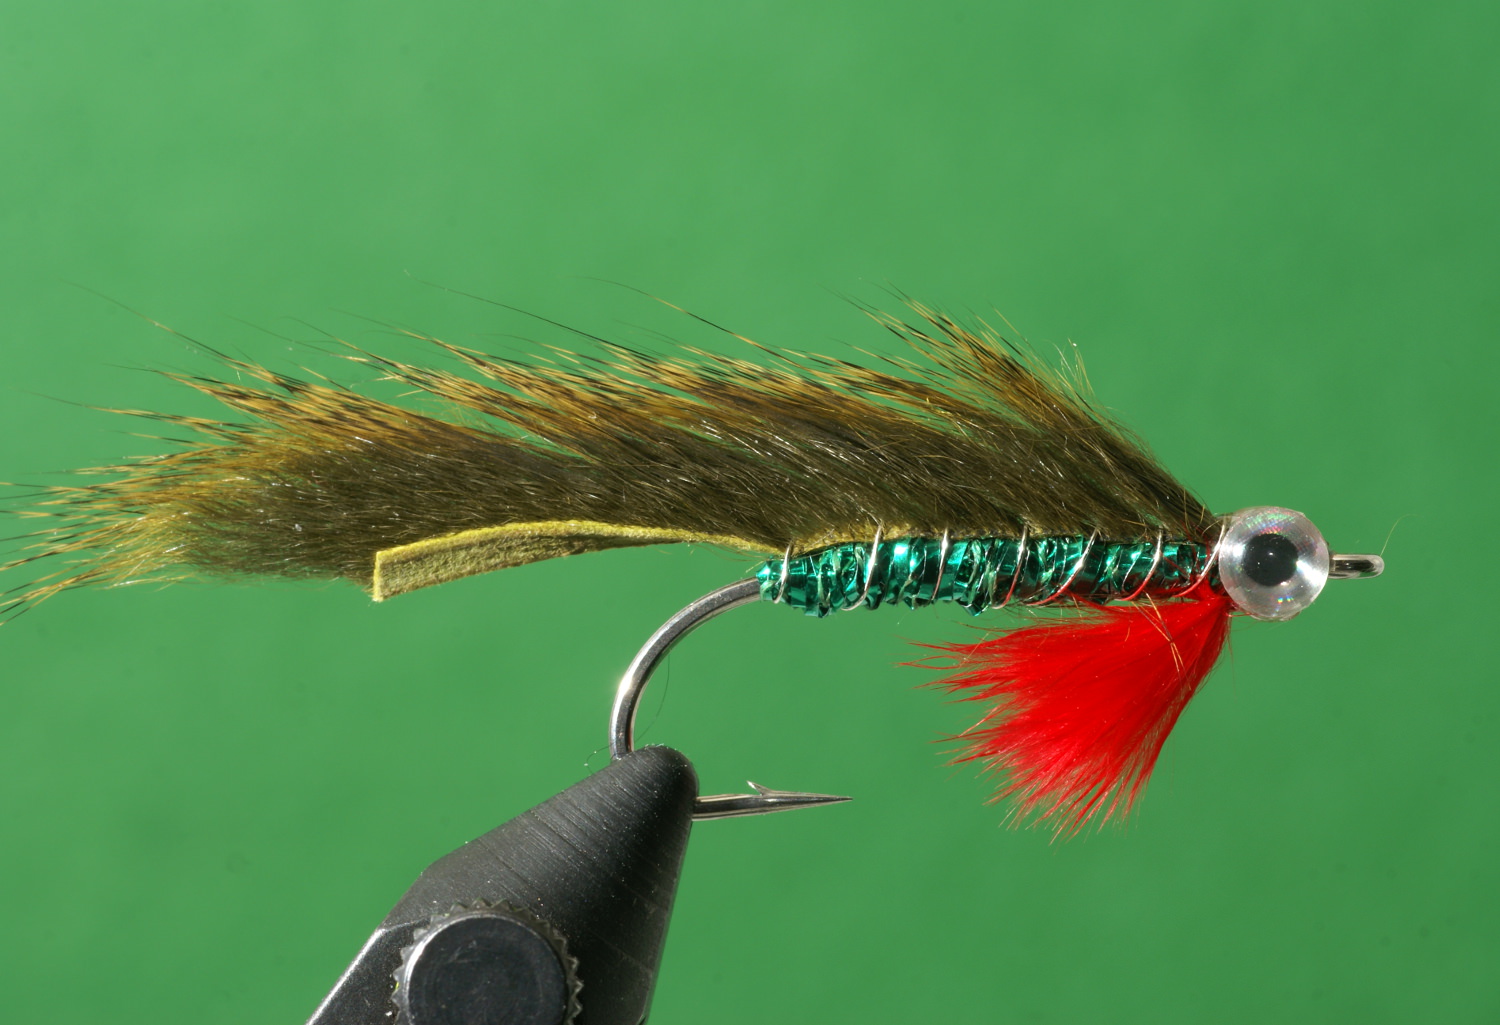 Stillwater Hooks - Fly Fishing